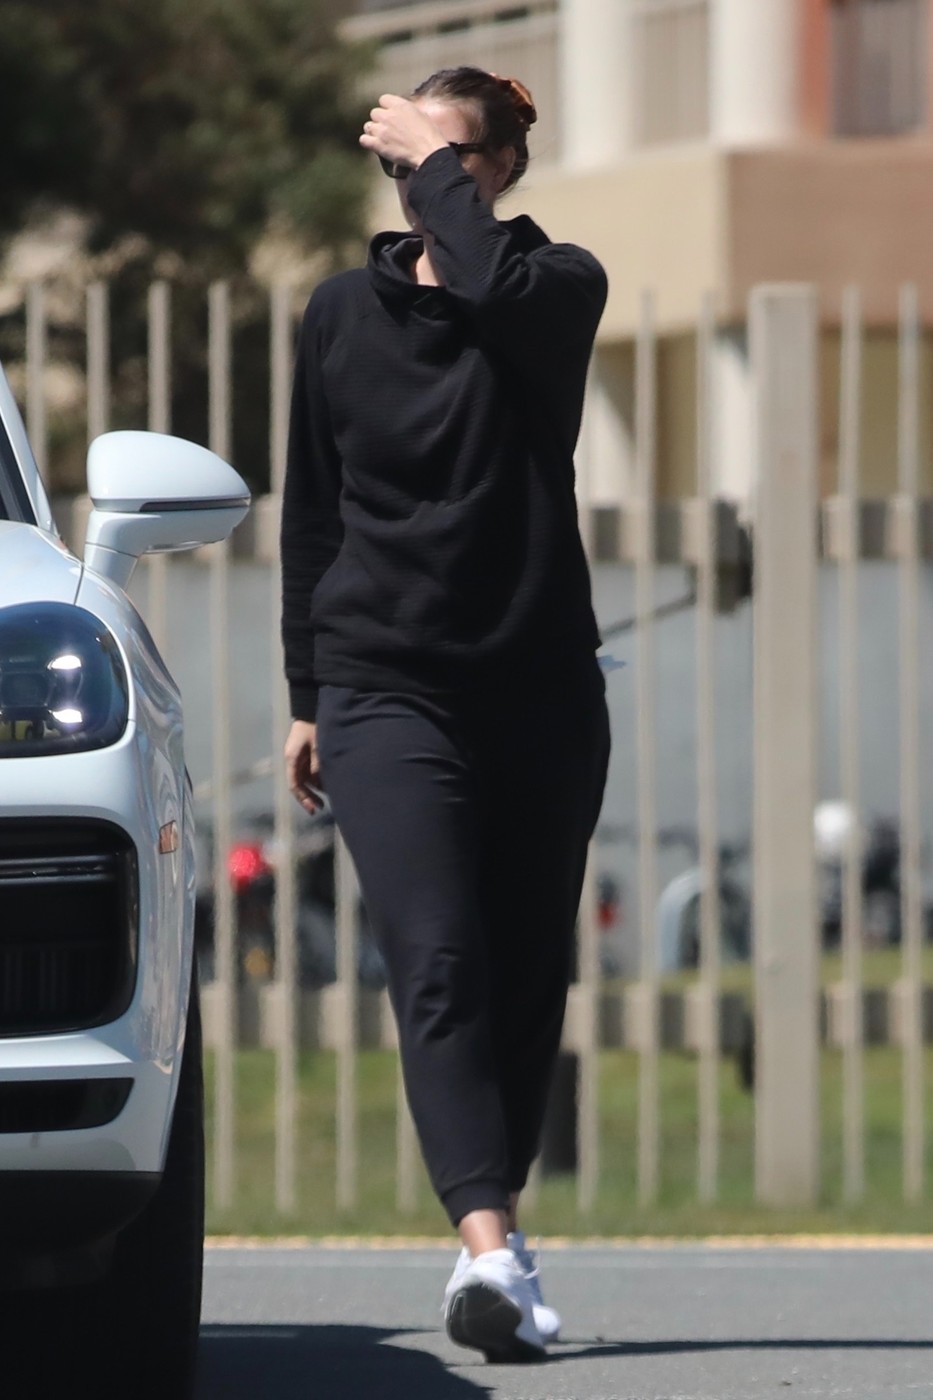 Maria Sharapova, într-un trening negru, la plimbare